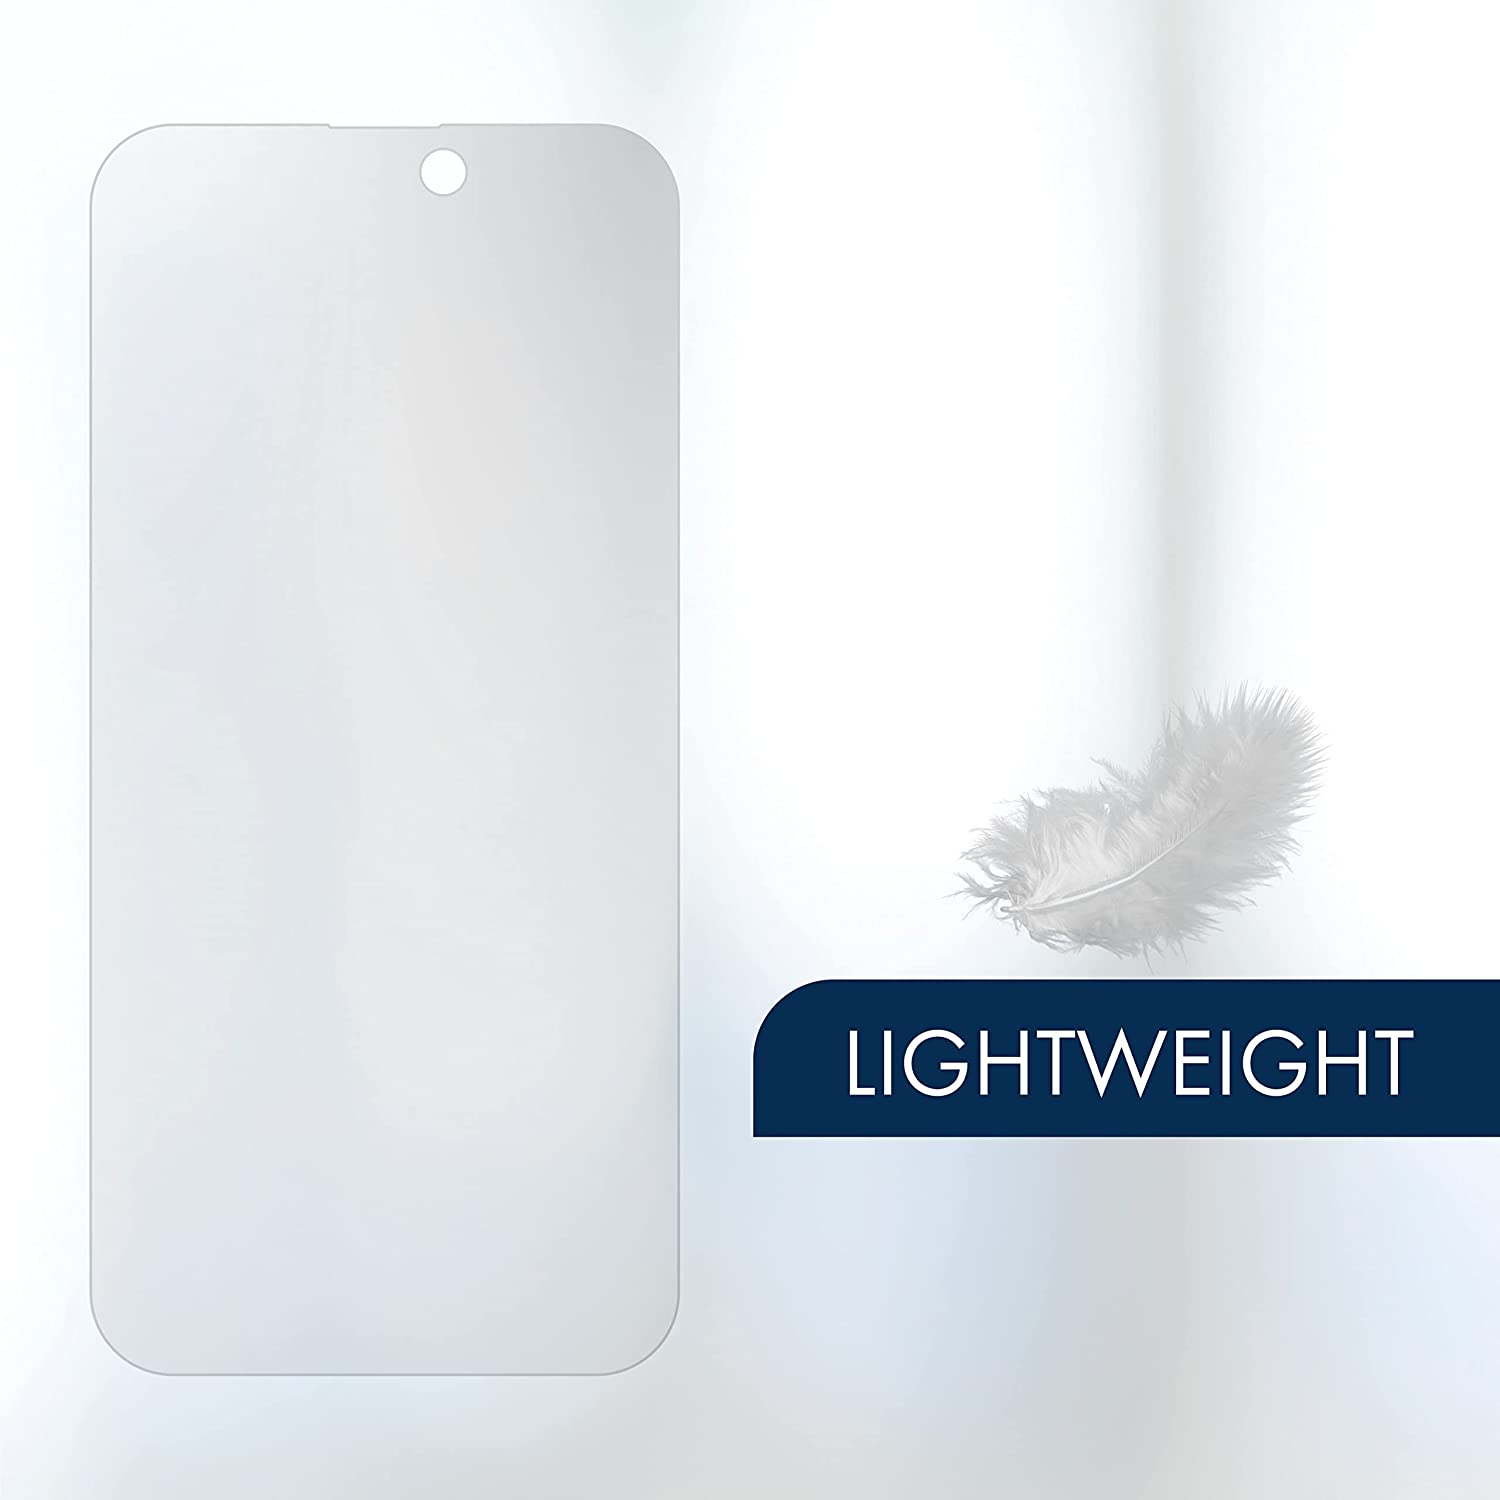 Apple iPhone 7 Plus Screen Protector + Full Body Skin Protector